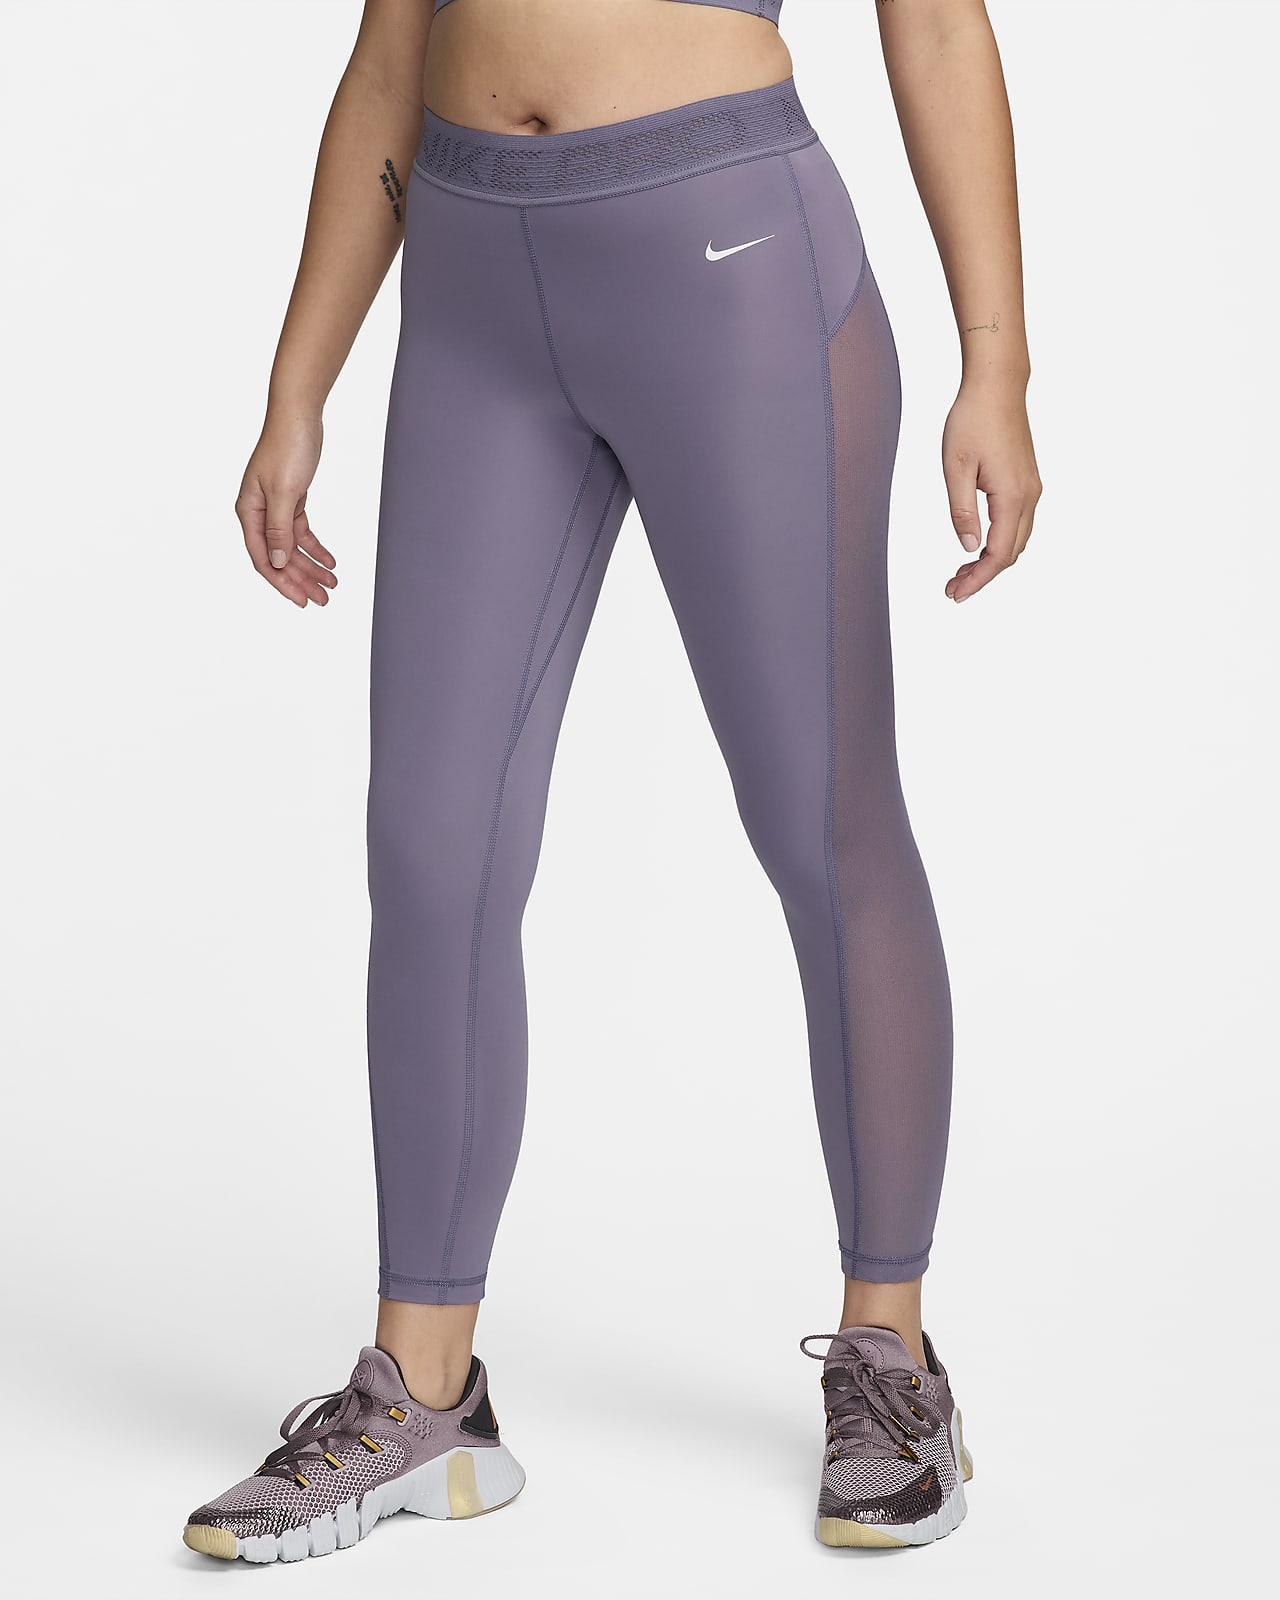 Nike Pro Mid-Rise Mesh Panneled Tights - Leggings Women's, Buy online